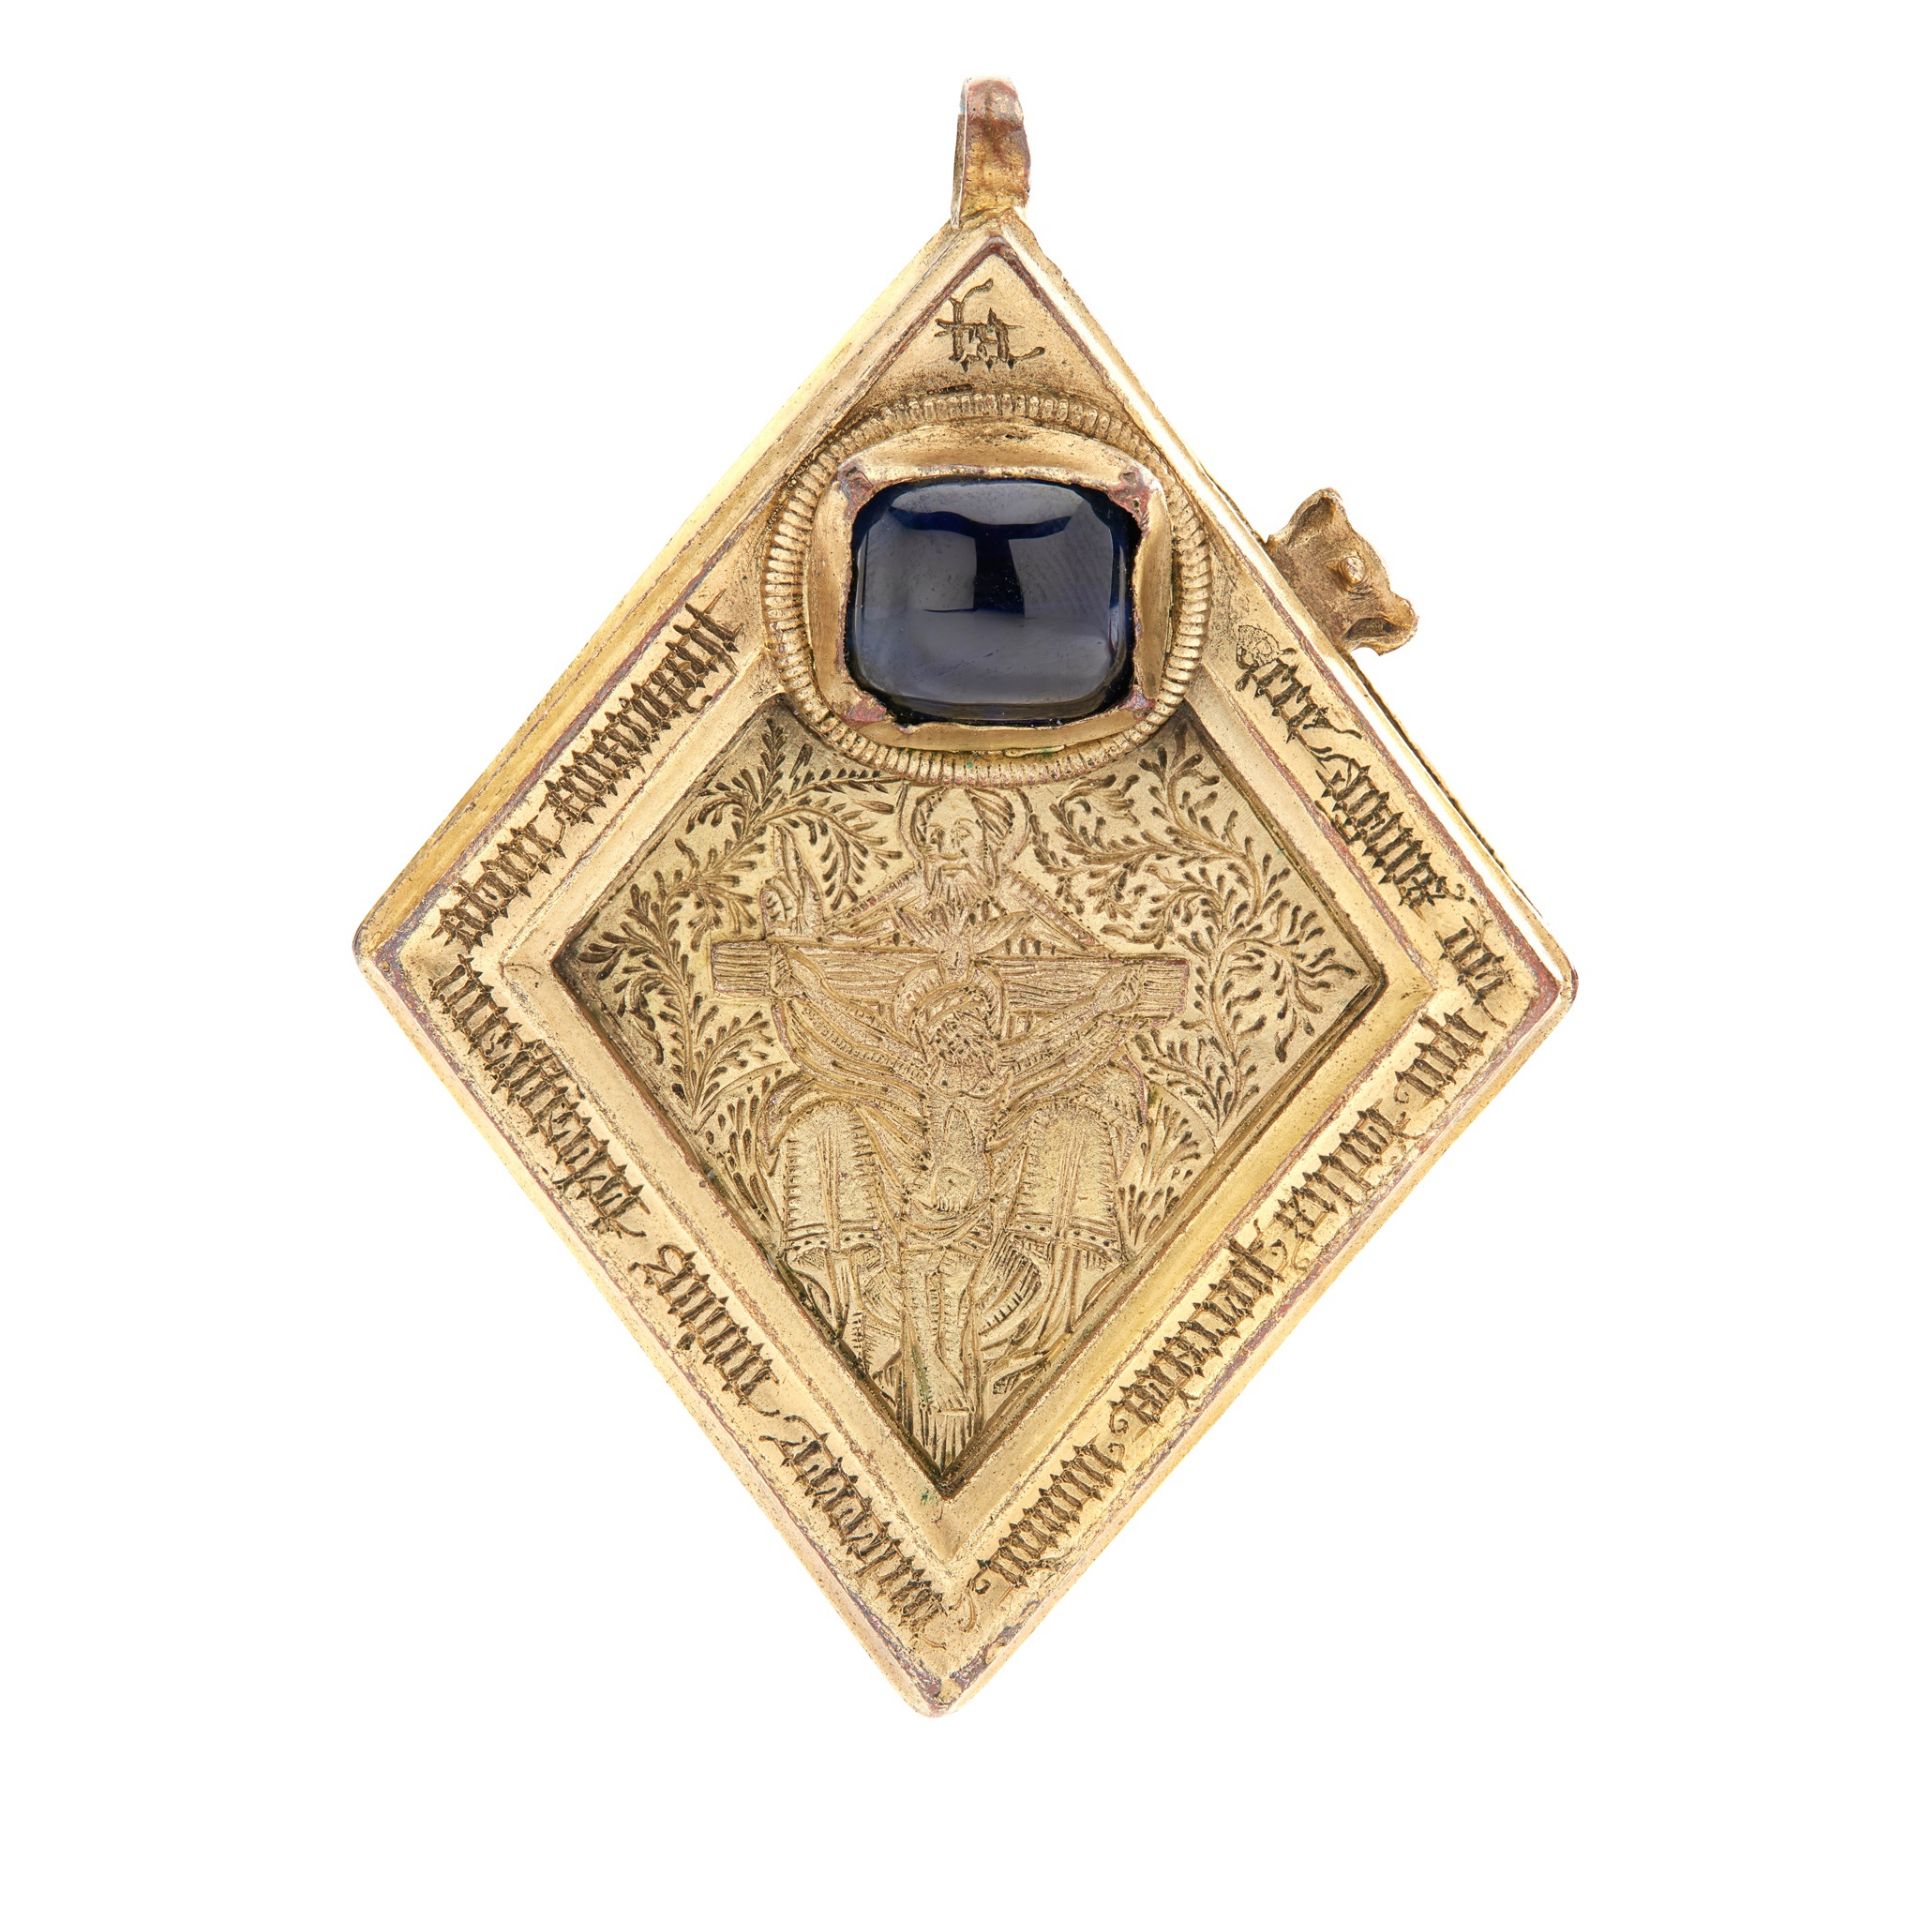 A copy of the Middleham Jewel